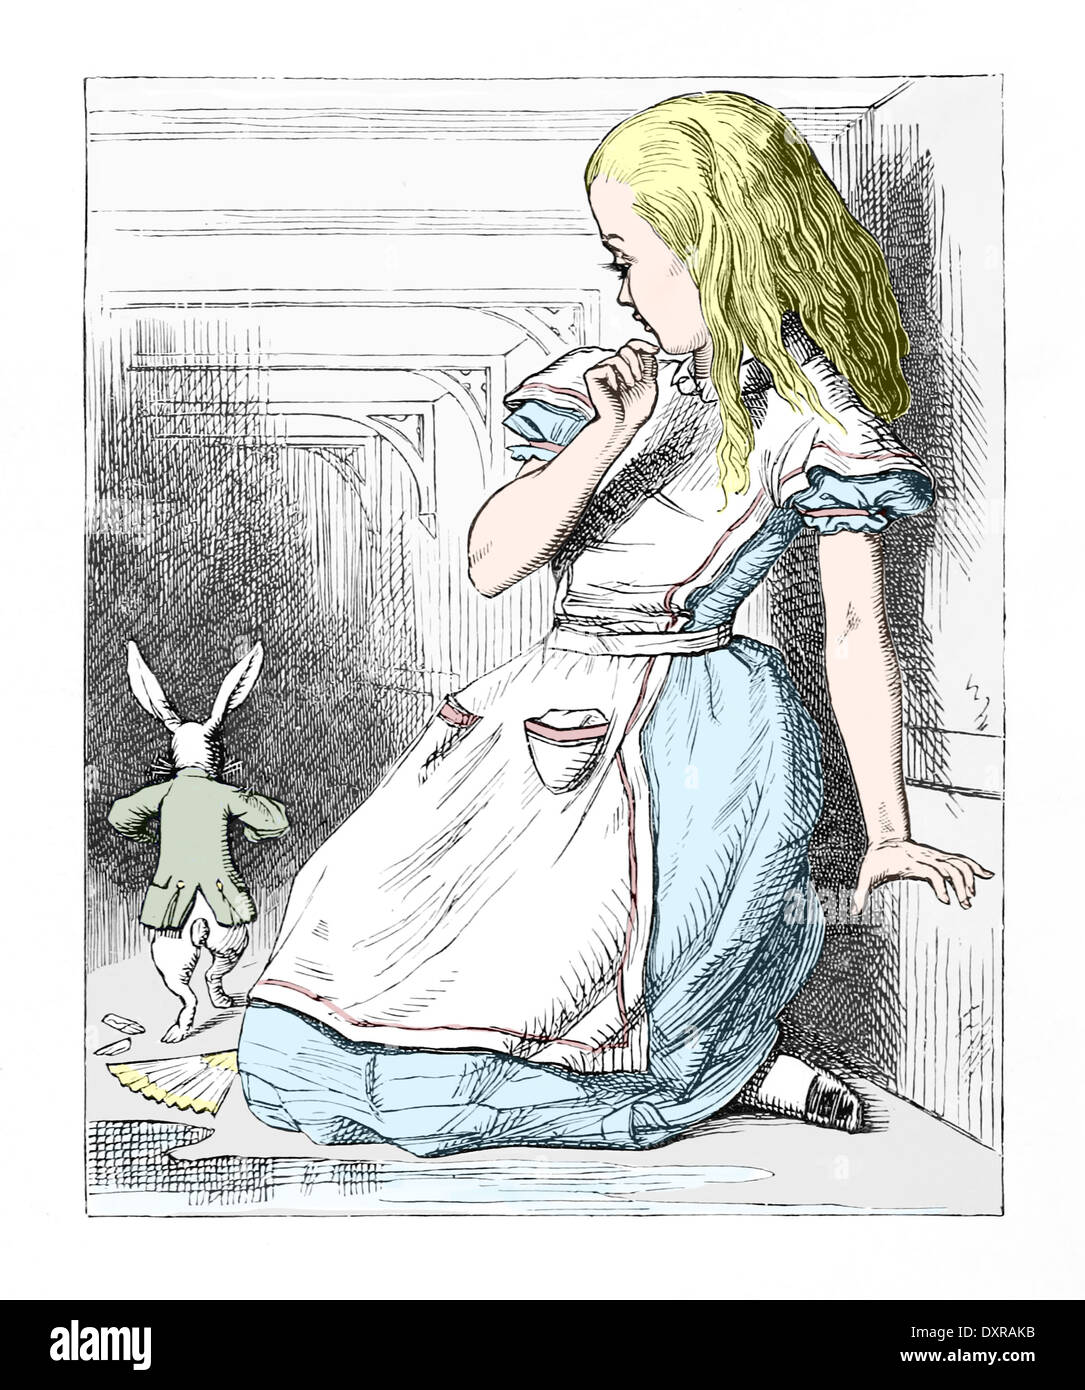 Алиса в стране чудес первая глава. Алиса в стране чудес иллюстрации из книги. Джона Тенниела Алиса в стране чудес. Алиса в стране чудес иллюстрации Льюиса Кэрролла.